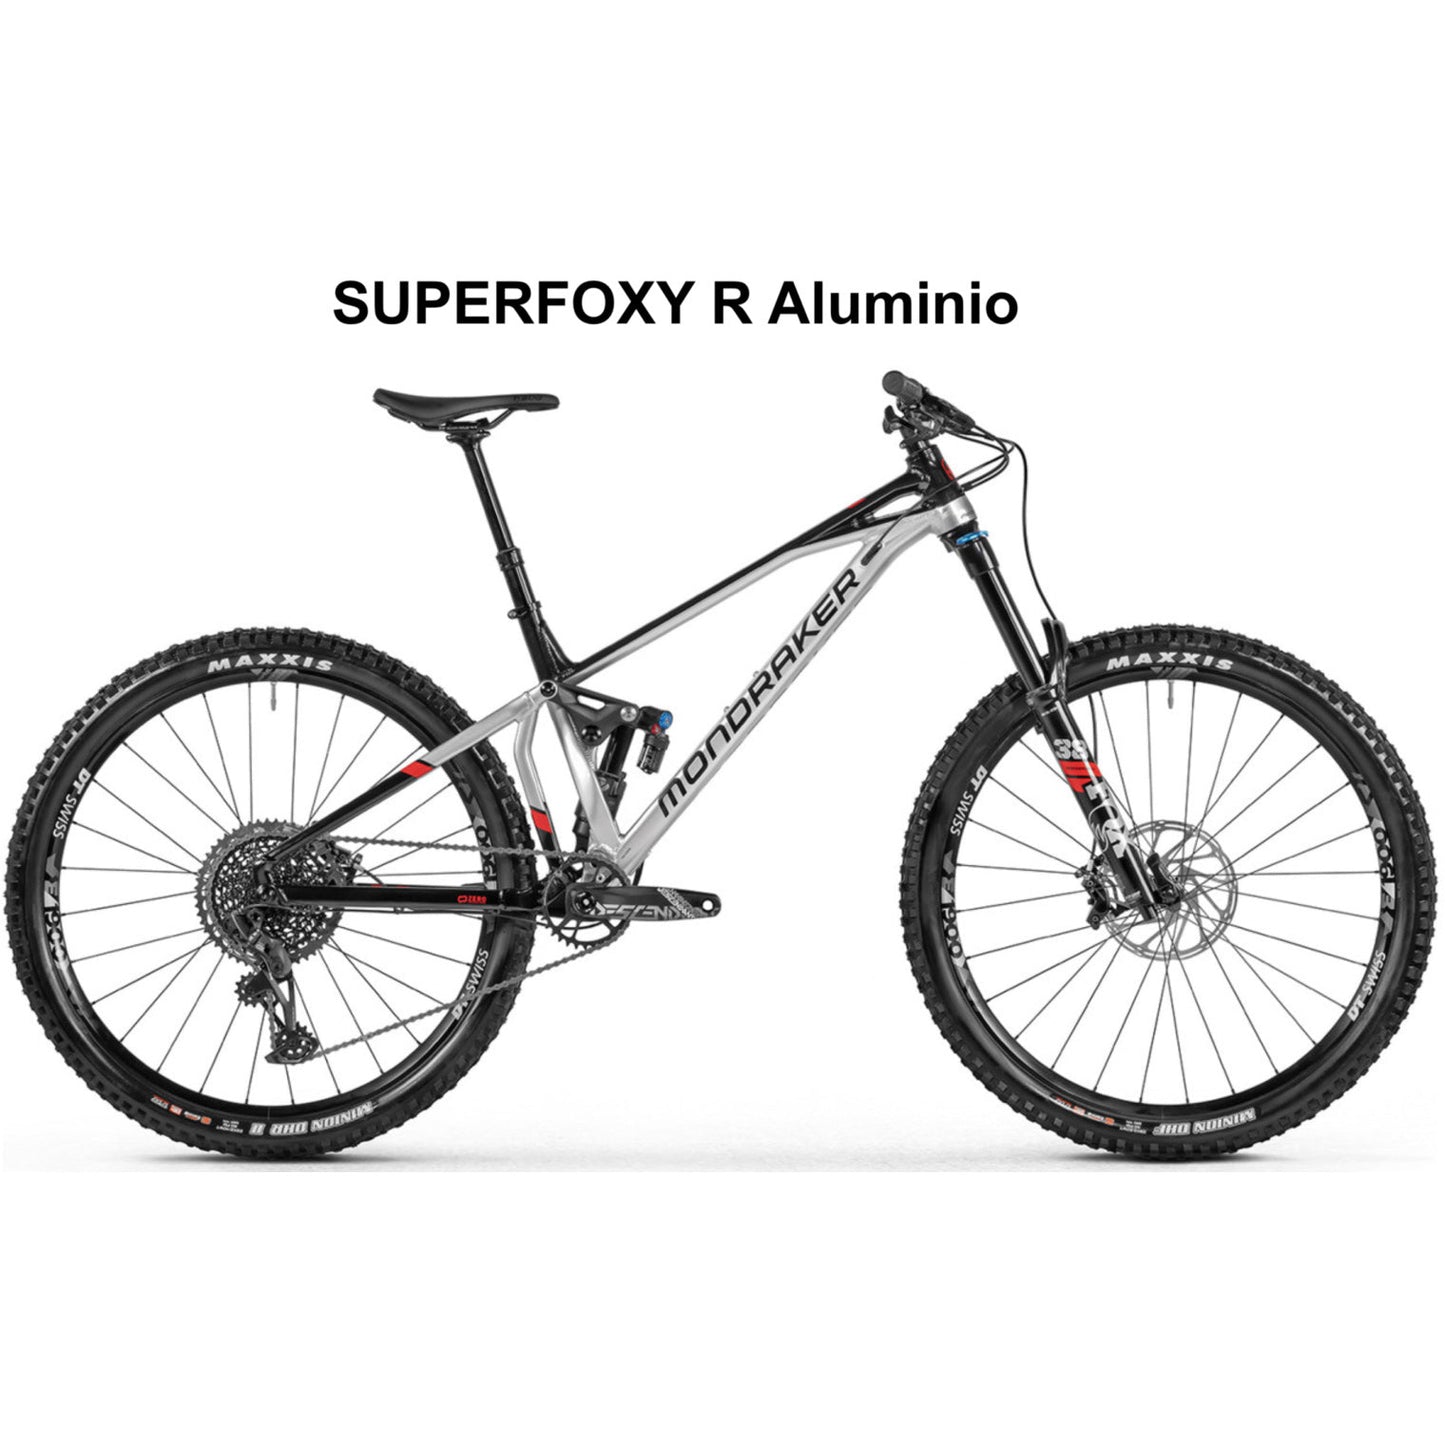 SUPERFOXY R ALUMINIO